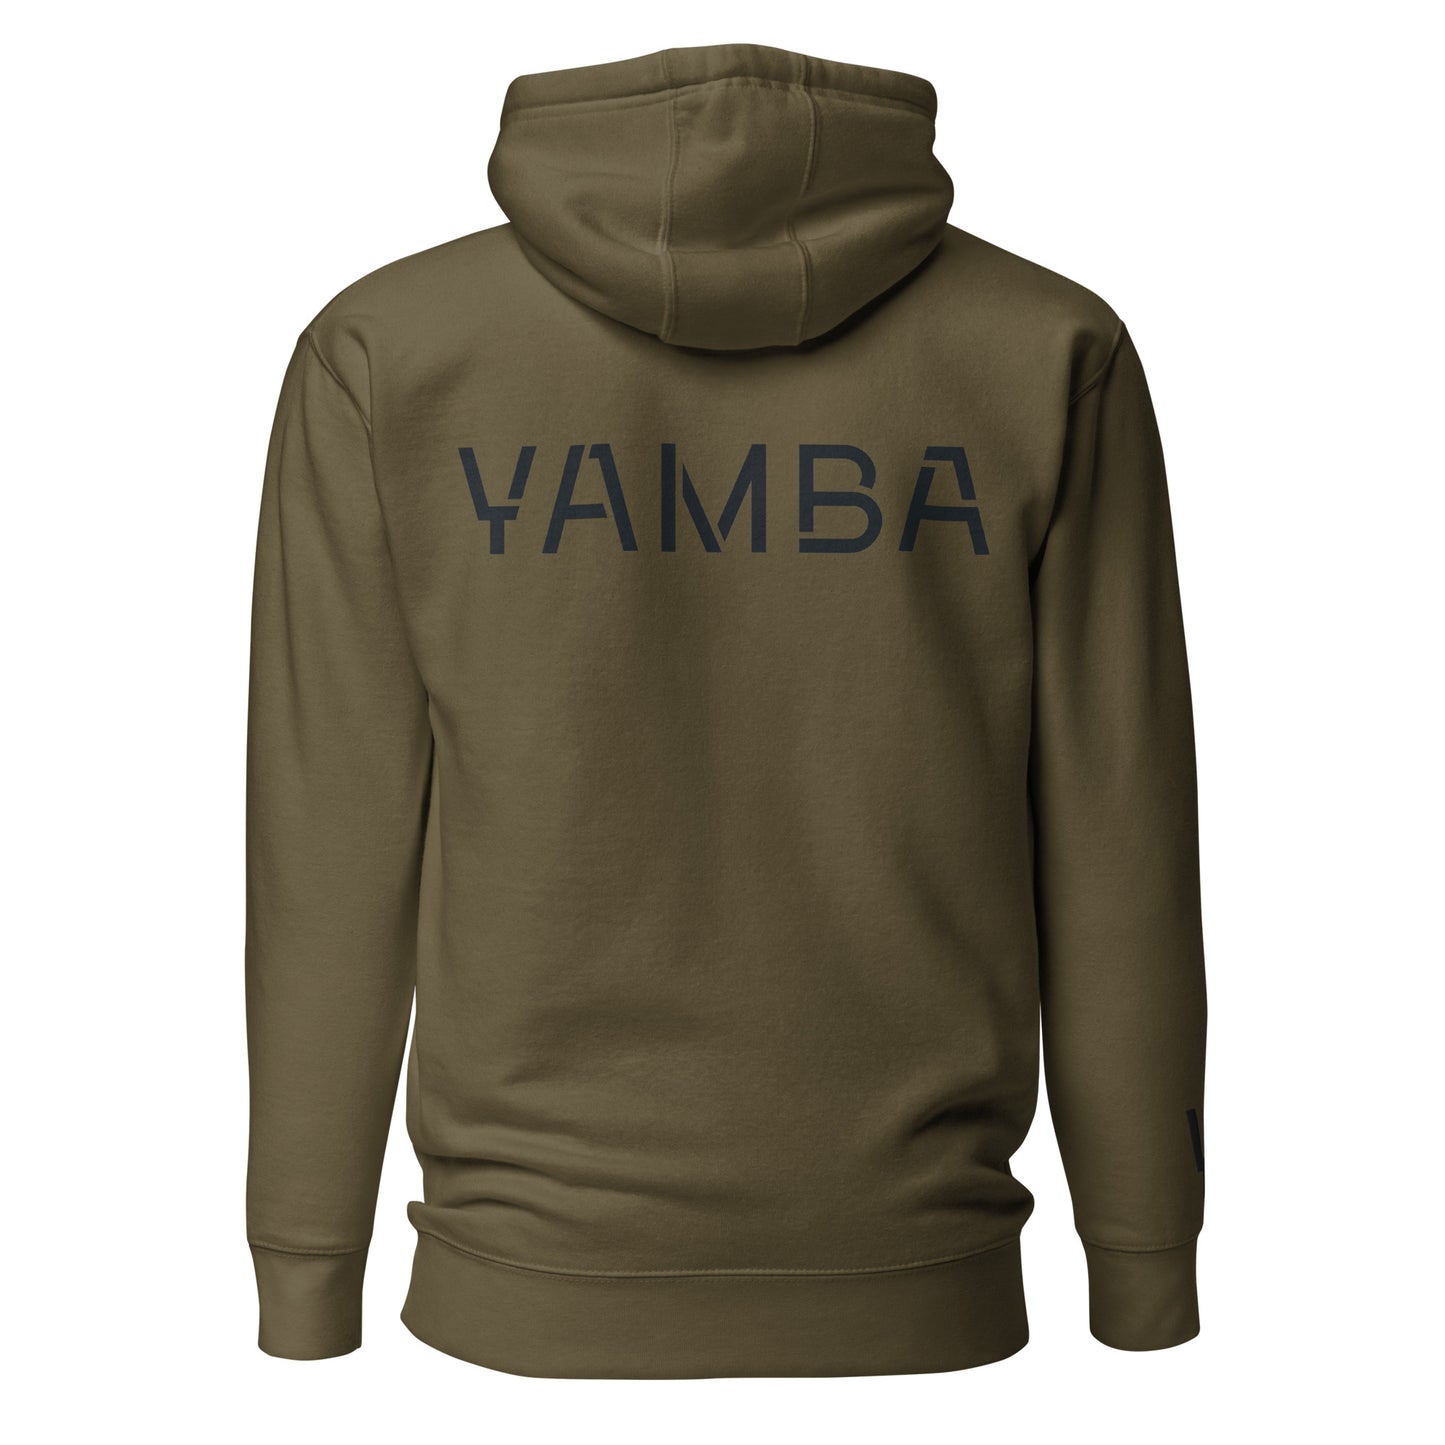 Yamba Unisex Hoodie